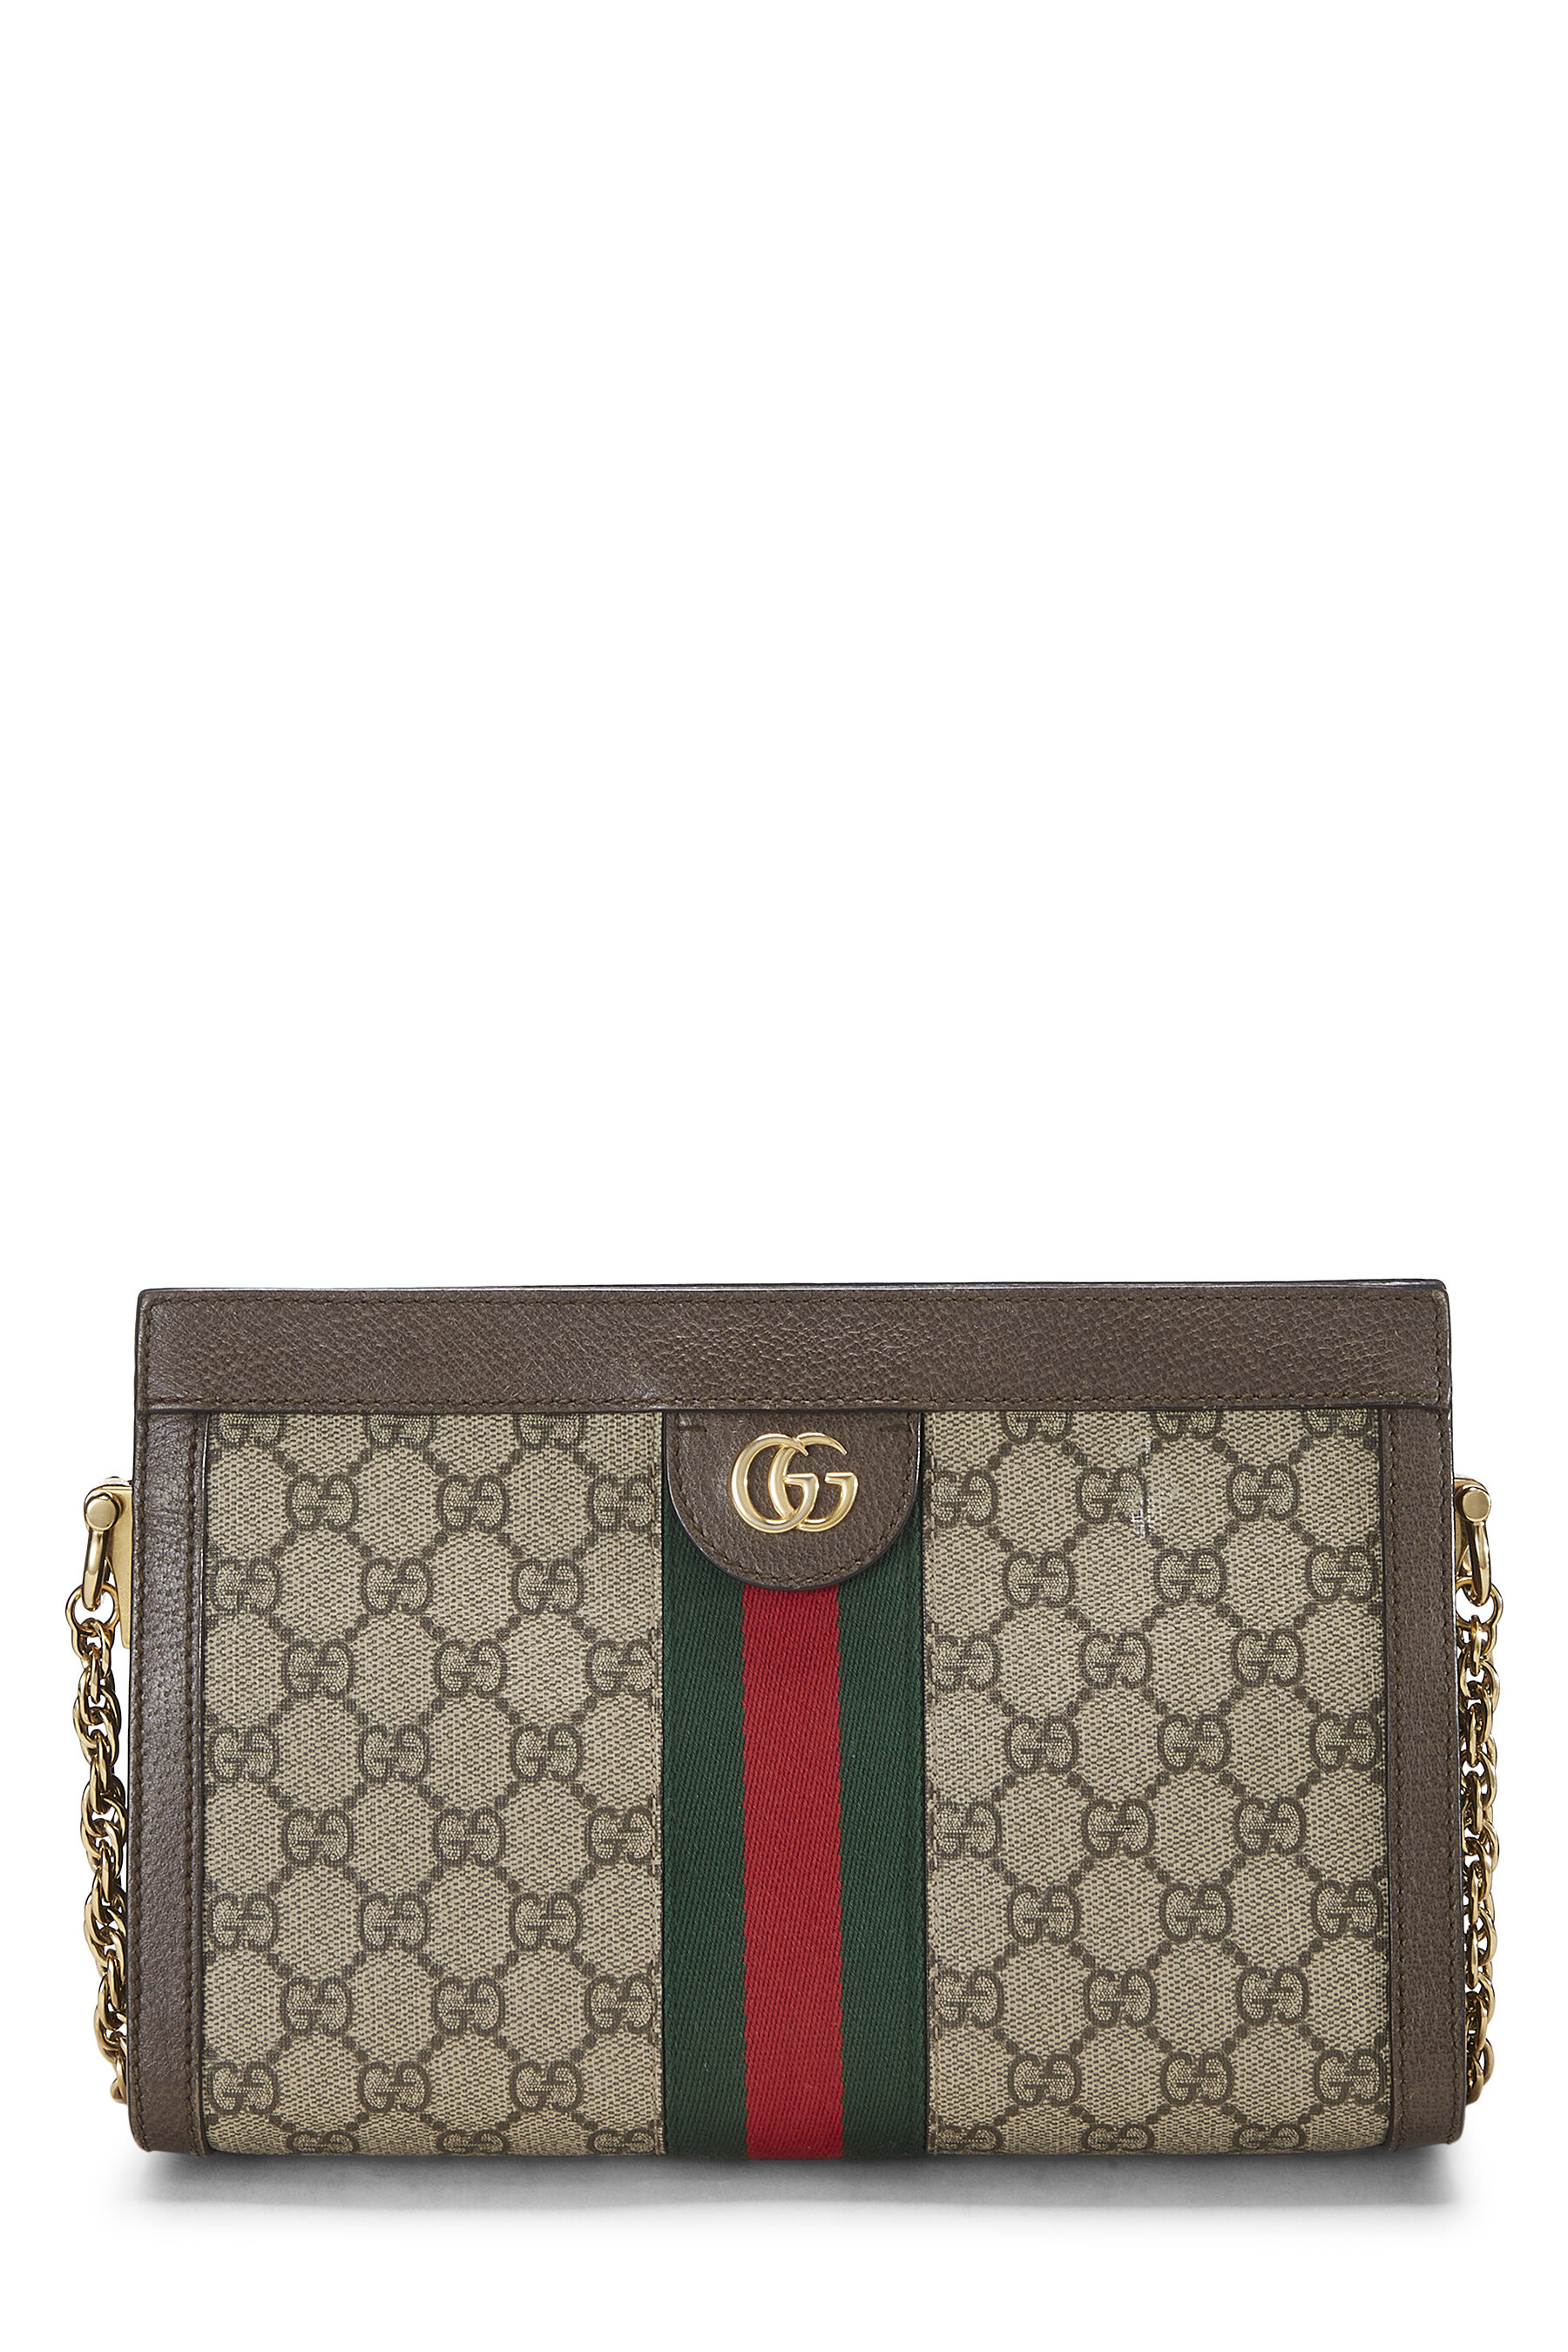 Gucci Original GG Supreme Canvas Ophidia Shoulder Bag Small